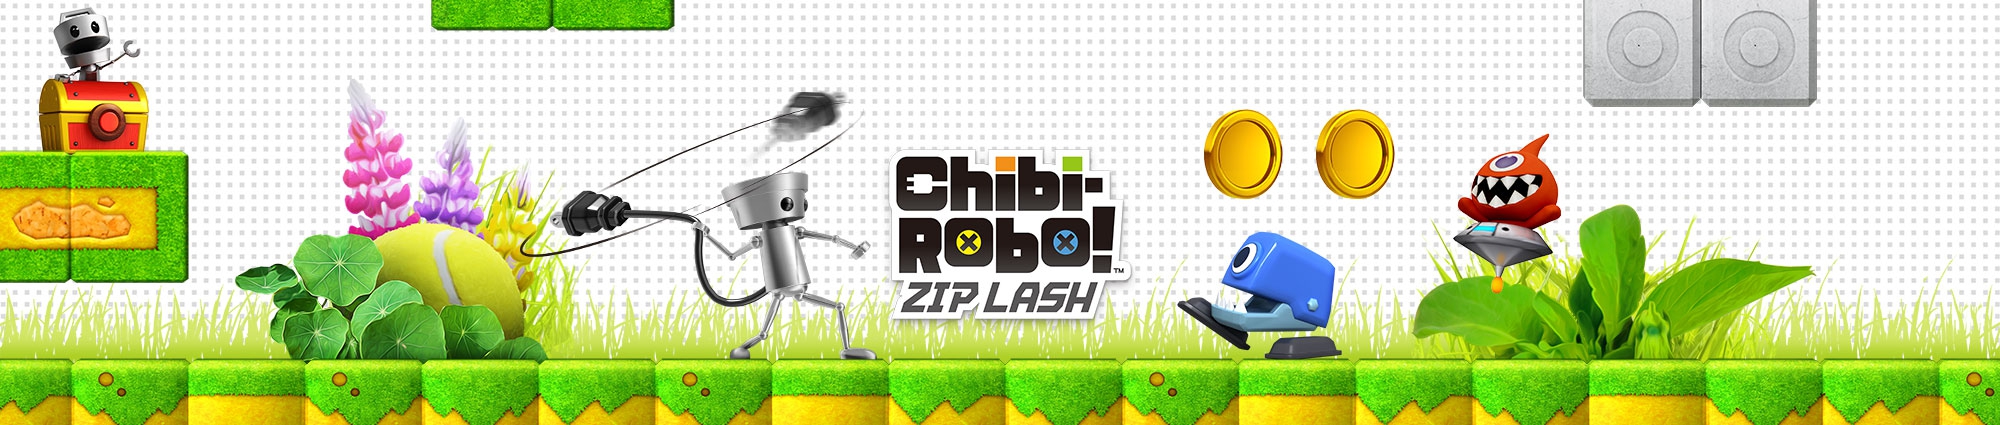 Banner Chibi-Robo Zip Lash